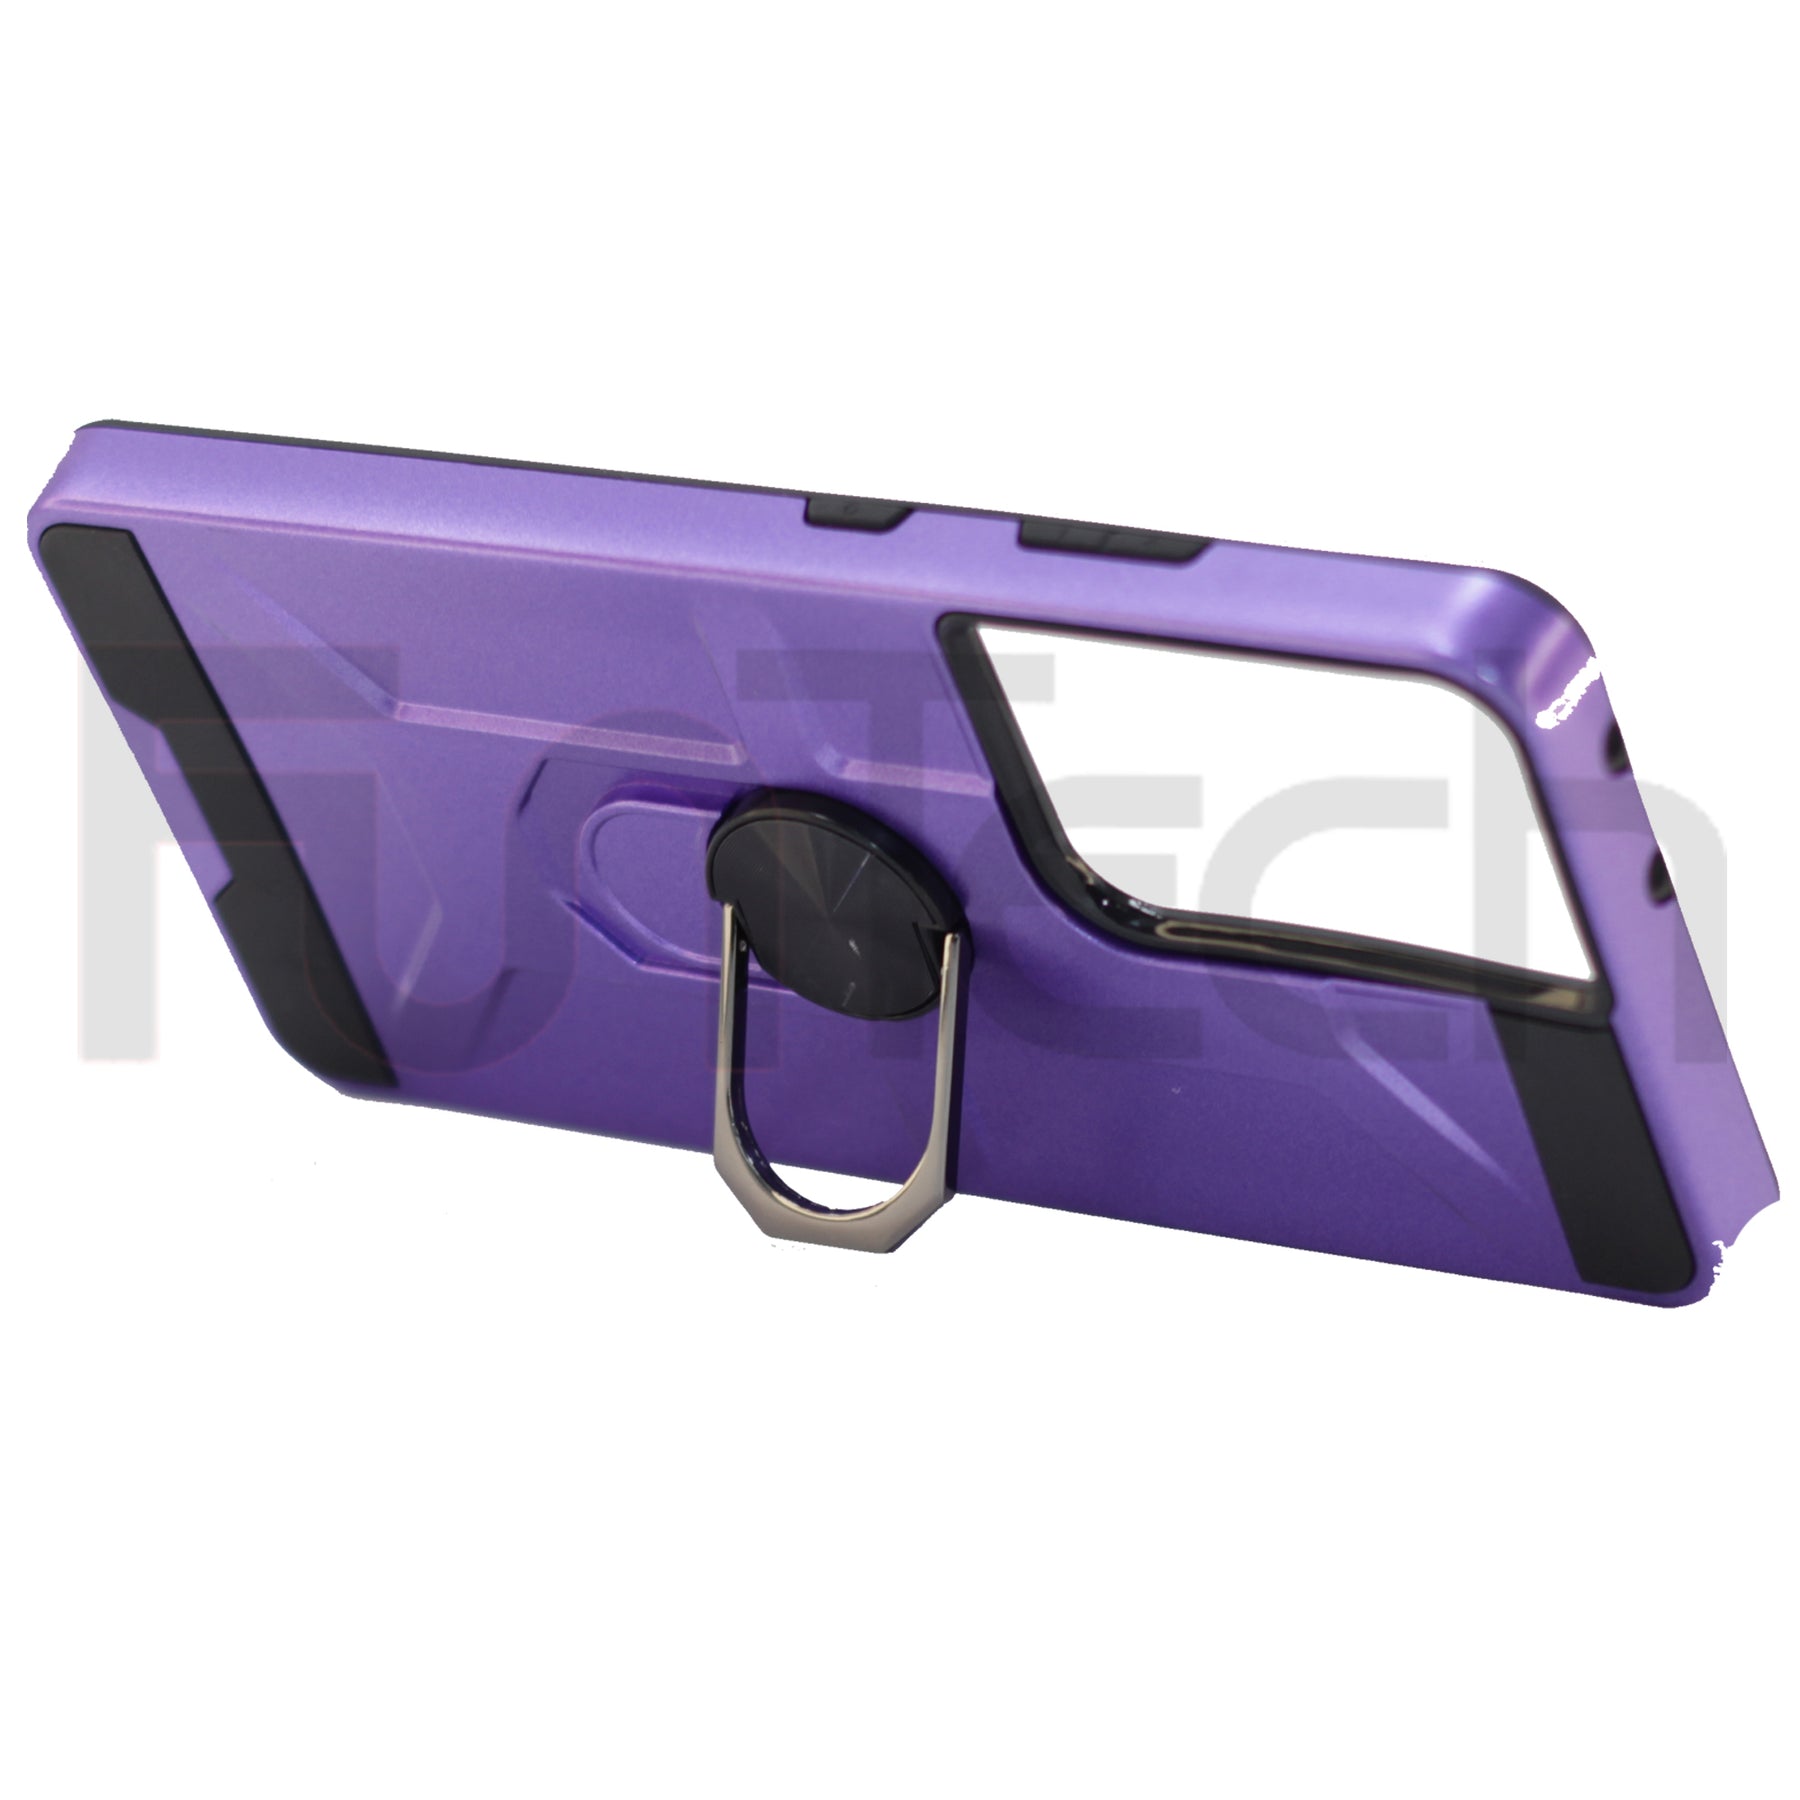 Samsung S21 Ultra, Ring Armor Case, Color Purple